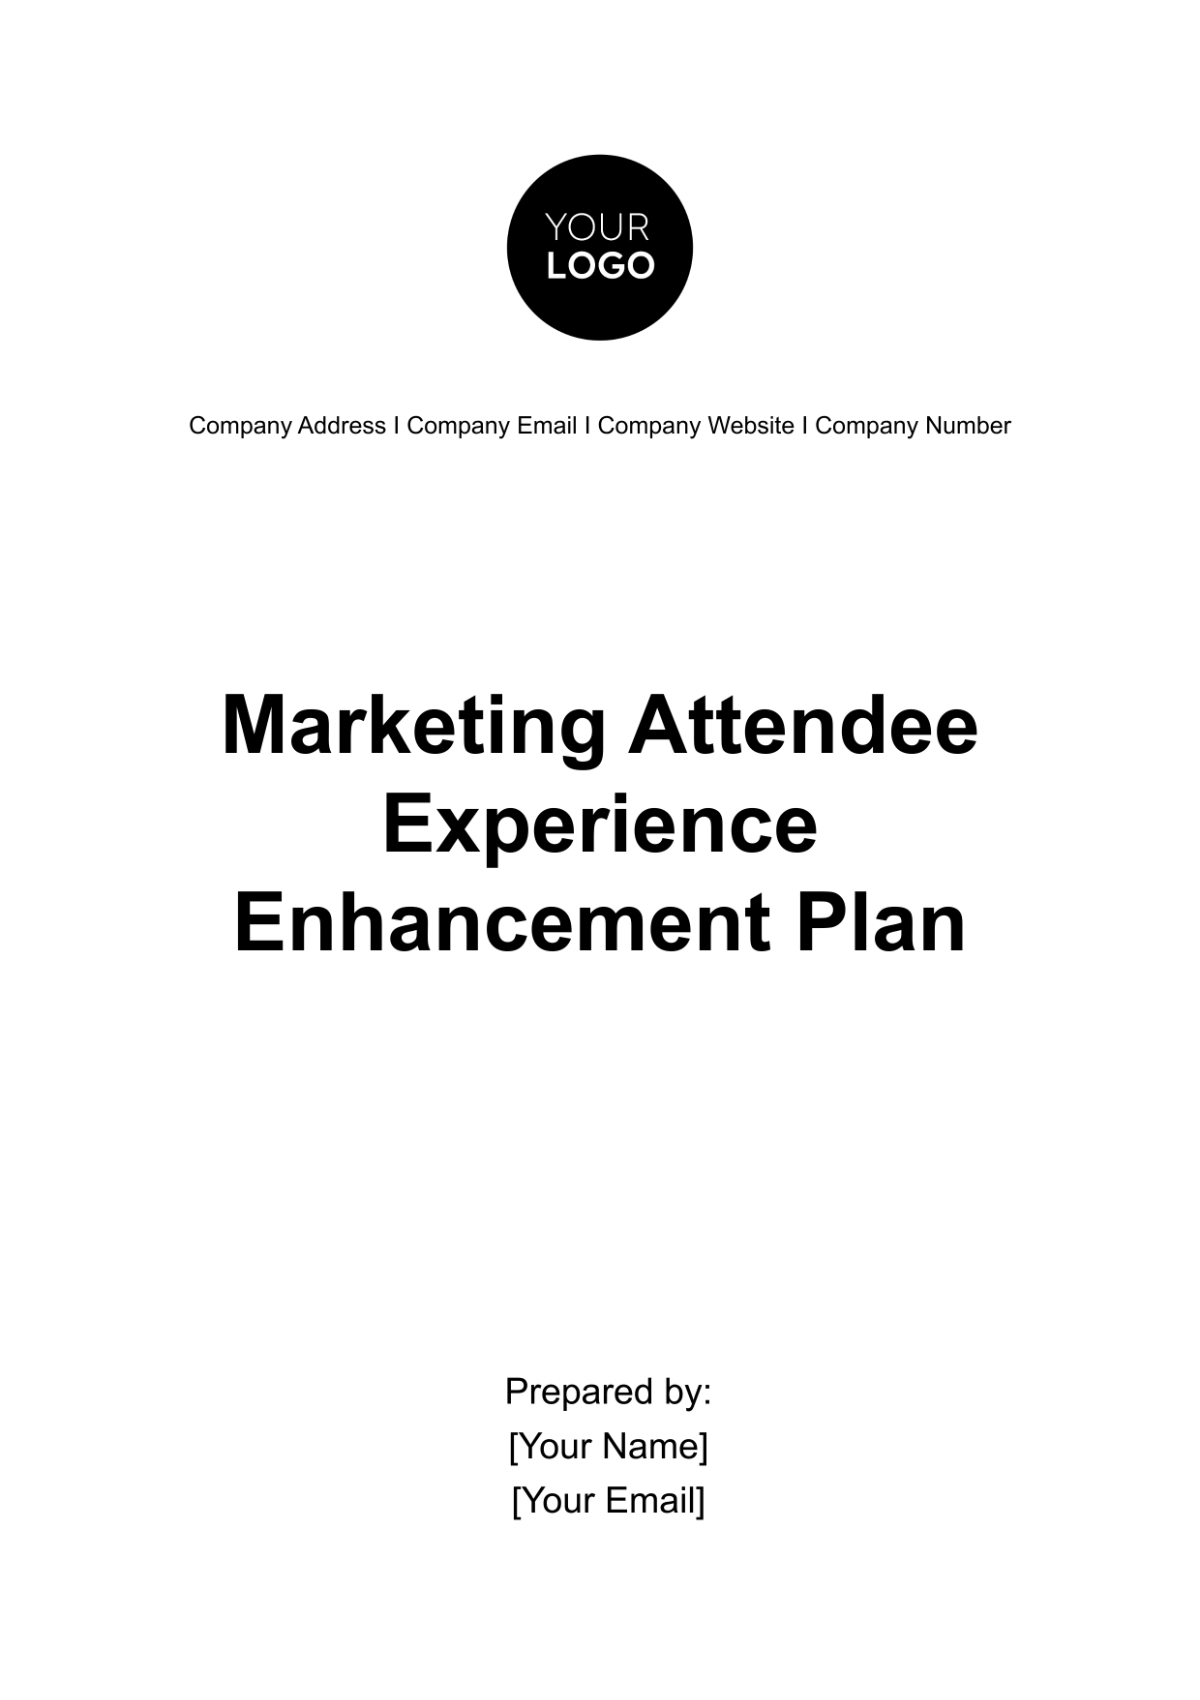 Free Marketing Attendee Experience Enhancement Plan Template